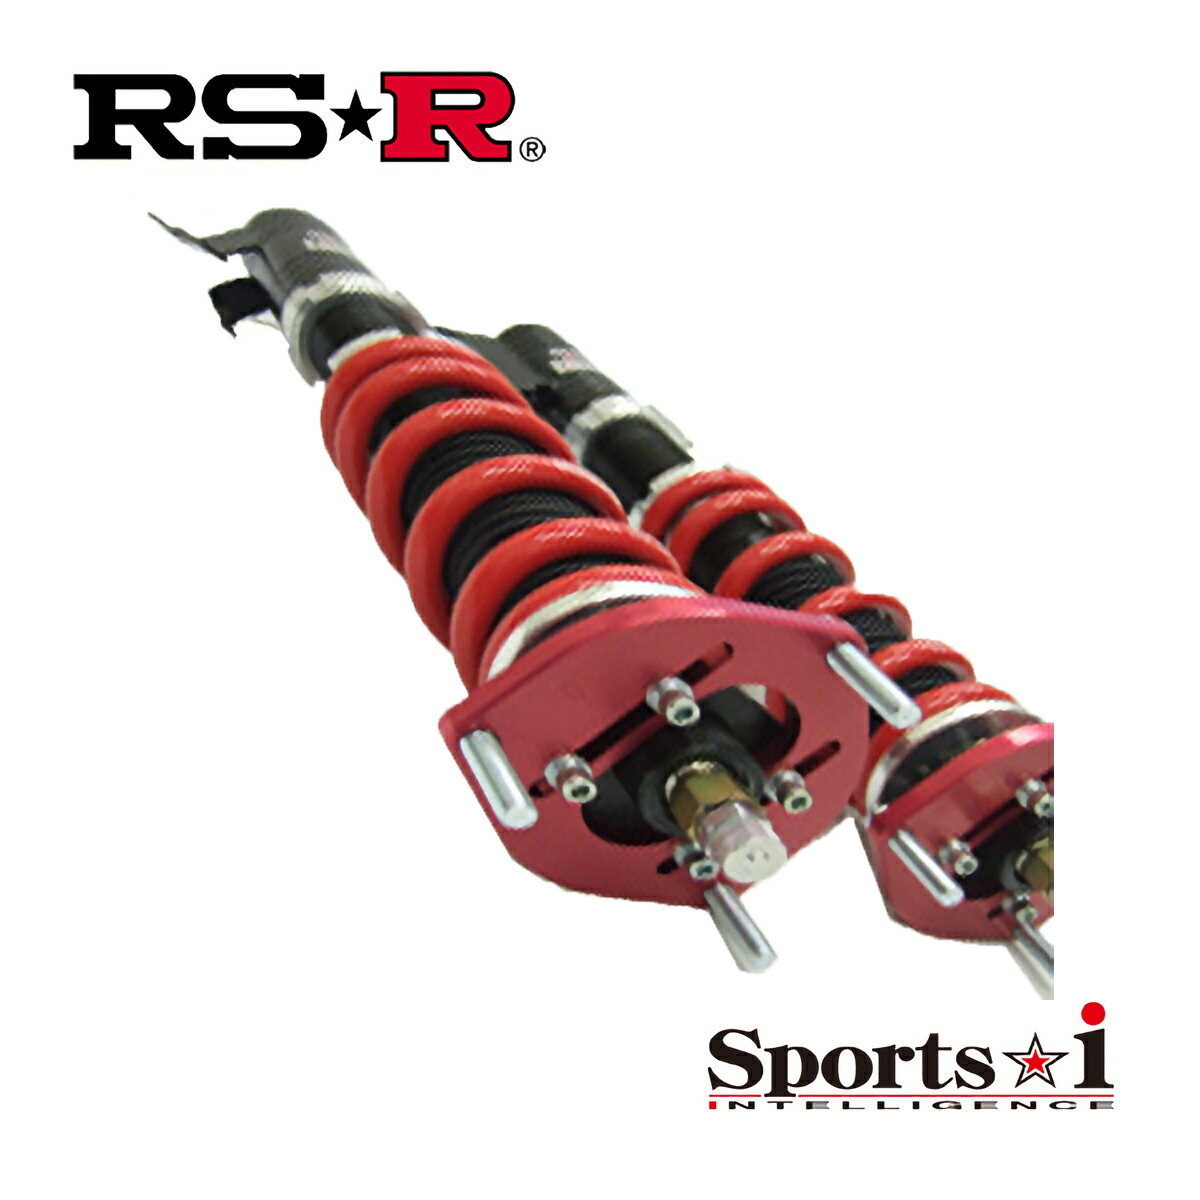 RSR スカイラインGTR BCNR33 車高調 リア車高調整 全長式 NSPN109M RS-R Sports-i スポーツi_画像1